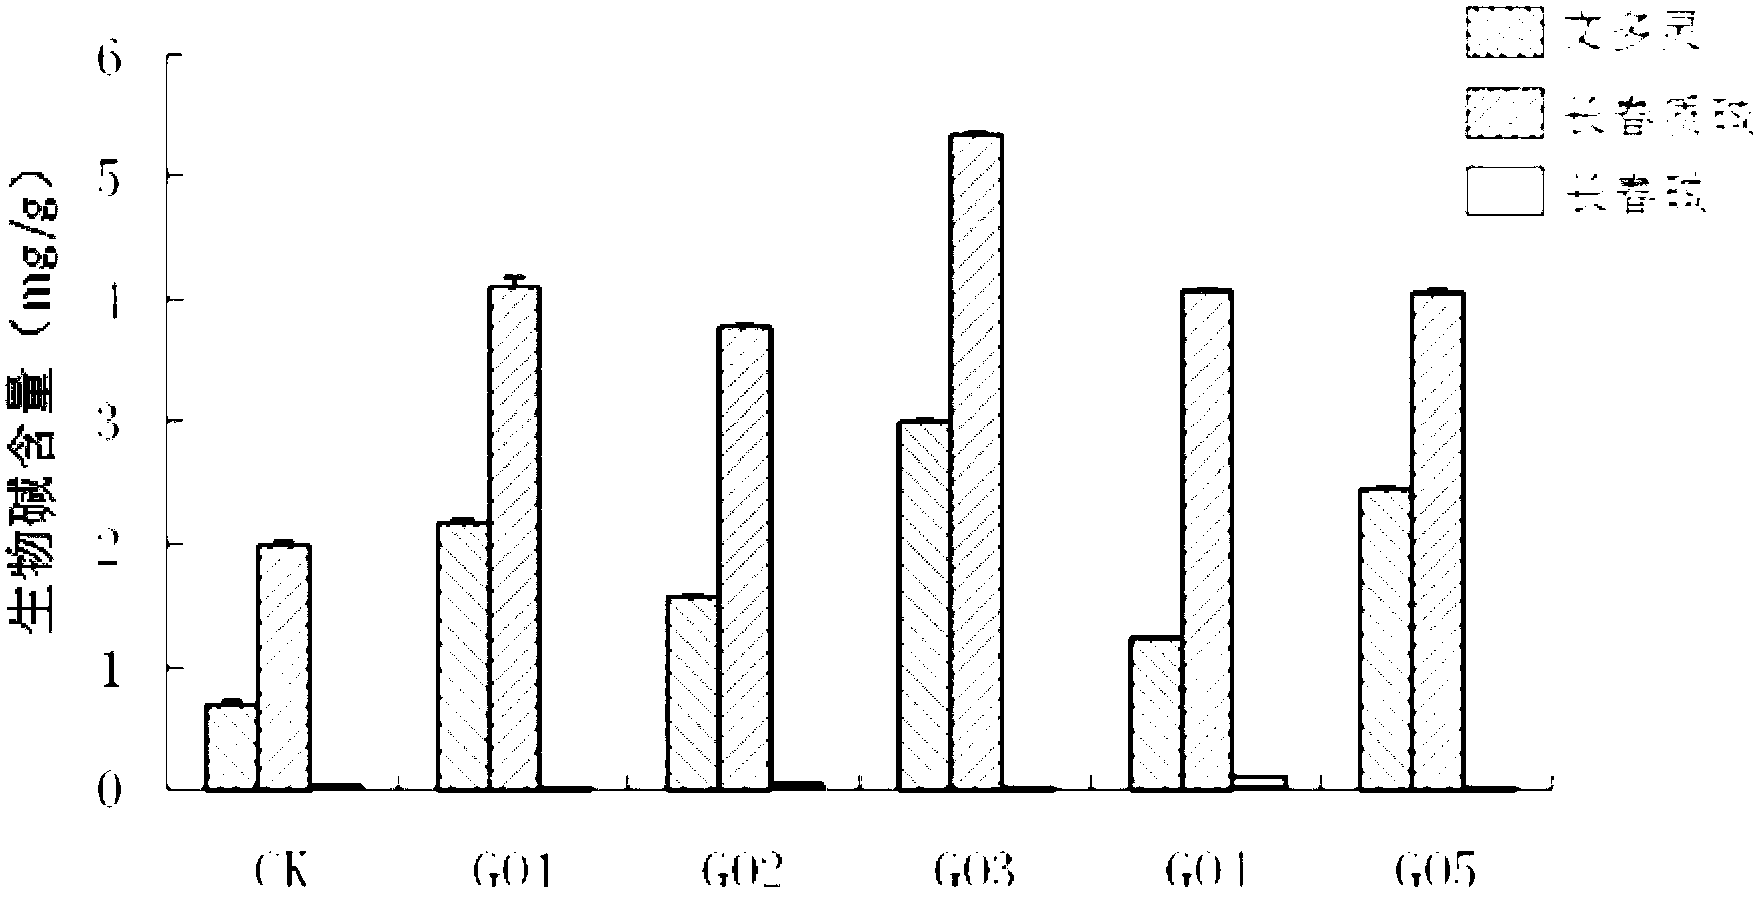 Method for increasing content of vinca alkaloids in vinca by corotation of orca3/g10h genes